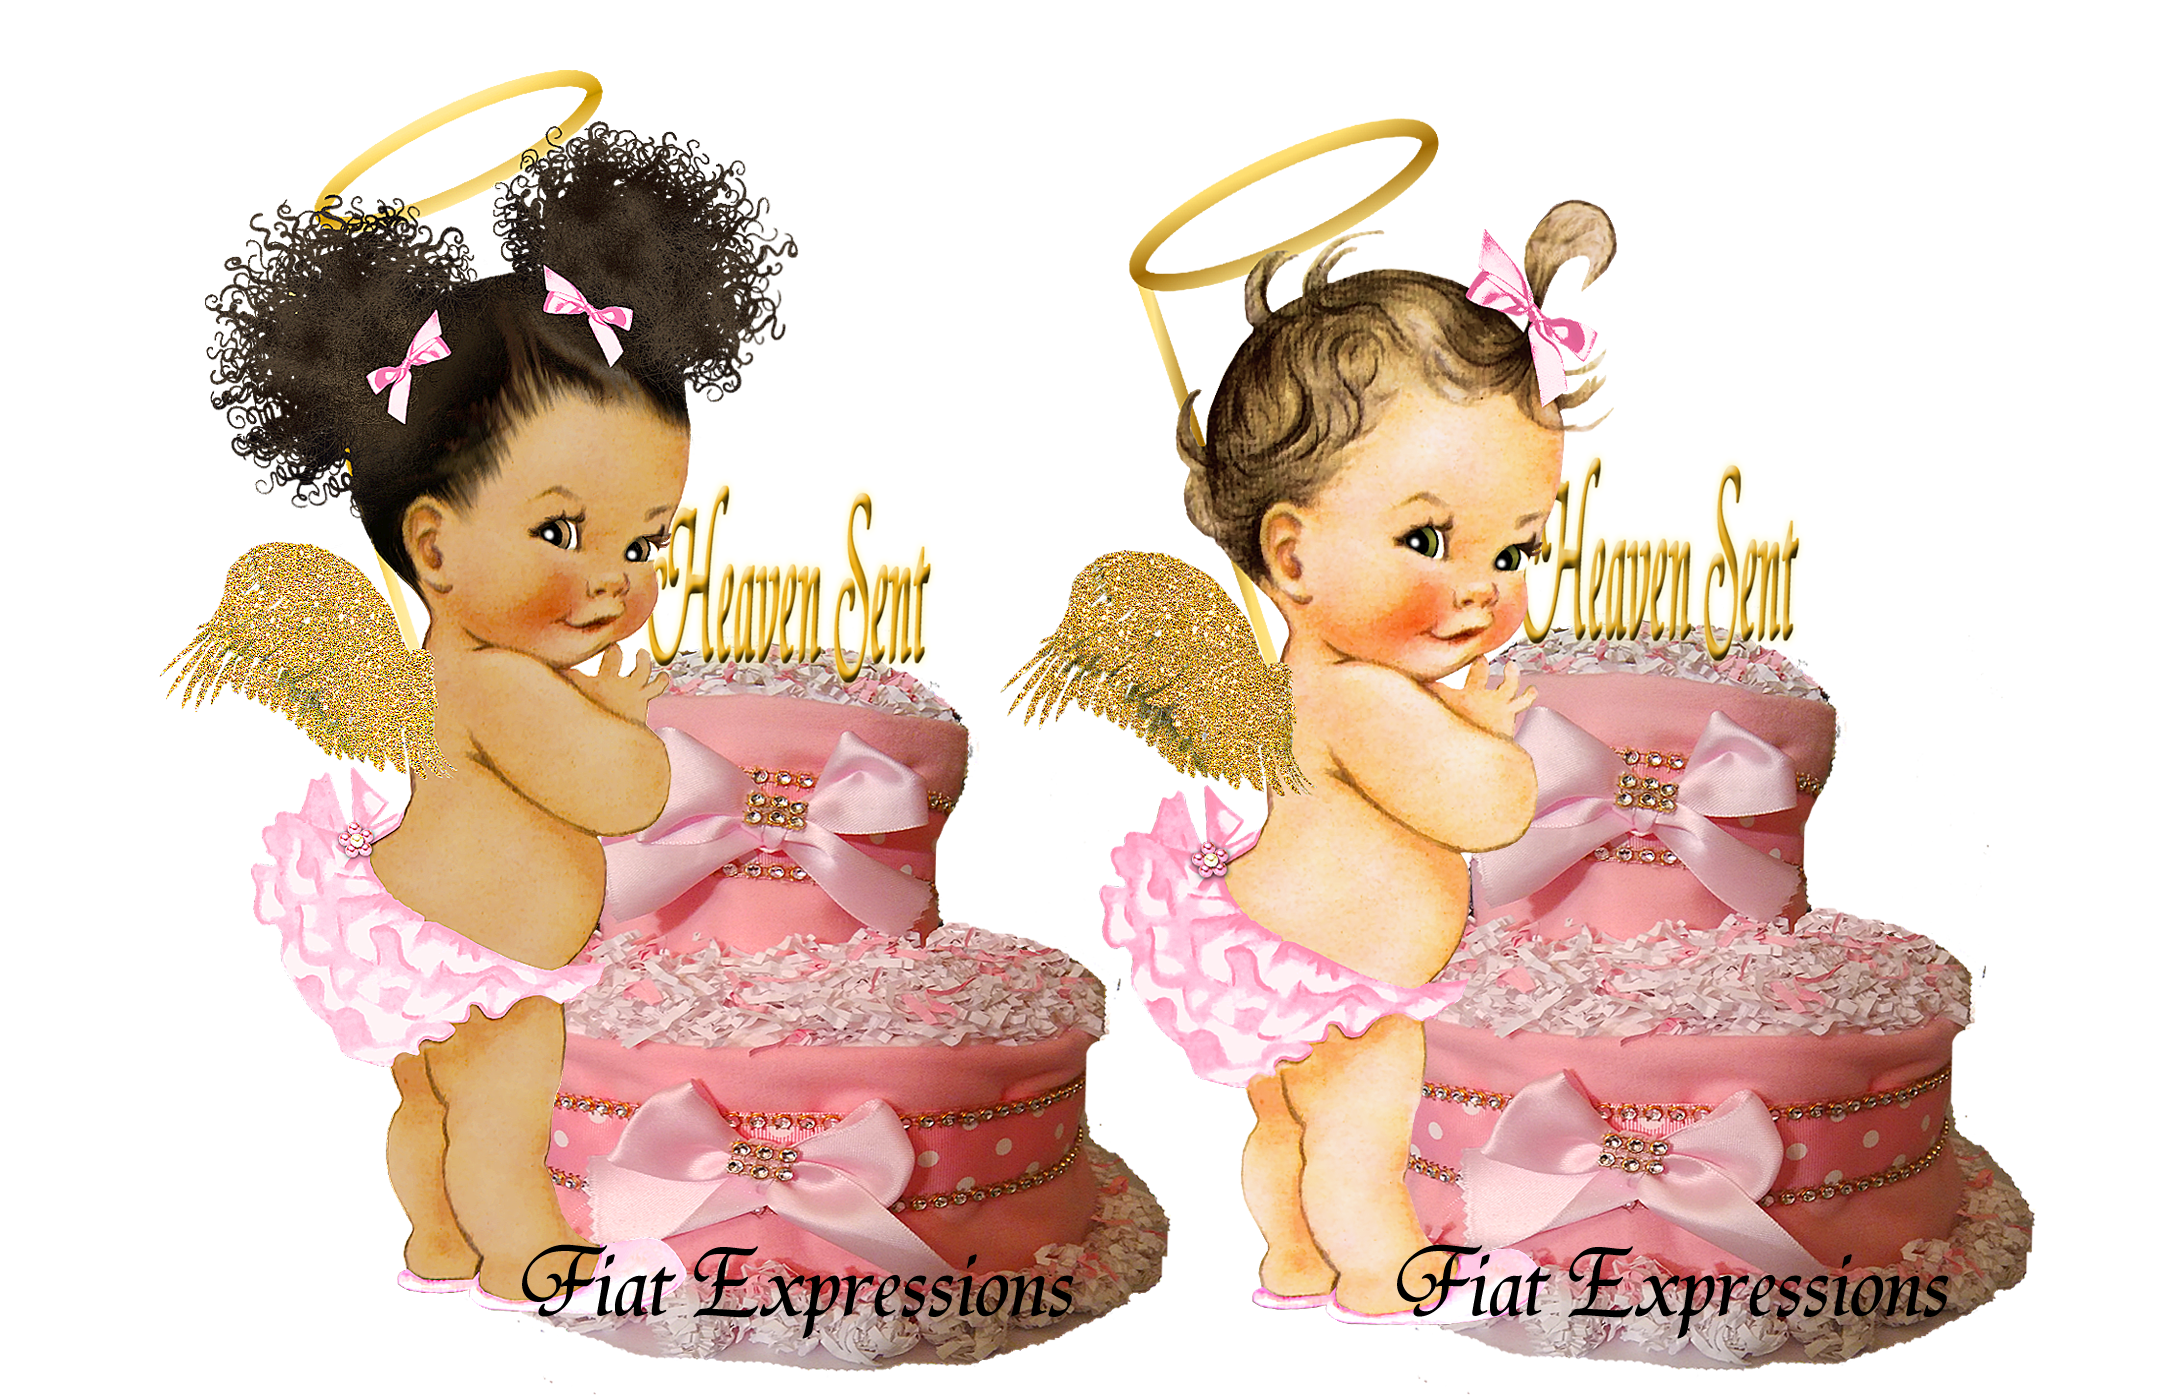 Heaven Sent 2 Tier Burp Cloth Diaper Cake Heaven Sent Baby Shower Centerpiece & Gift Girl Diaper Cake